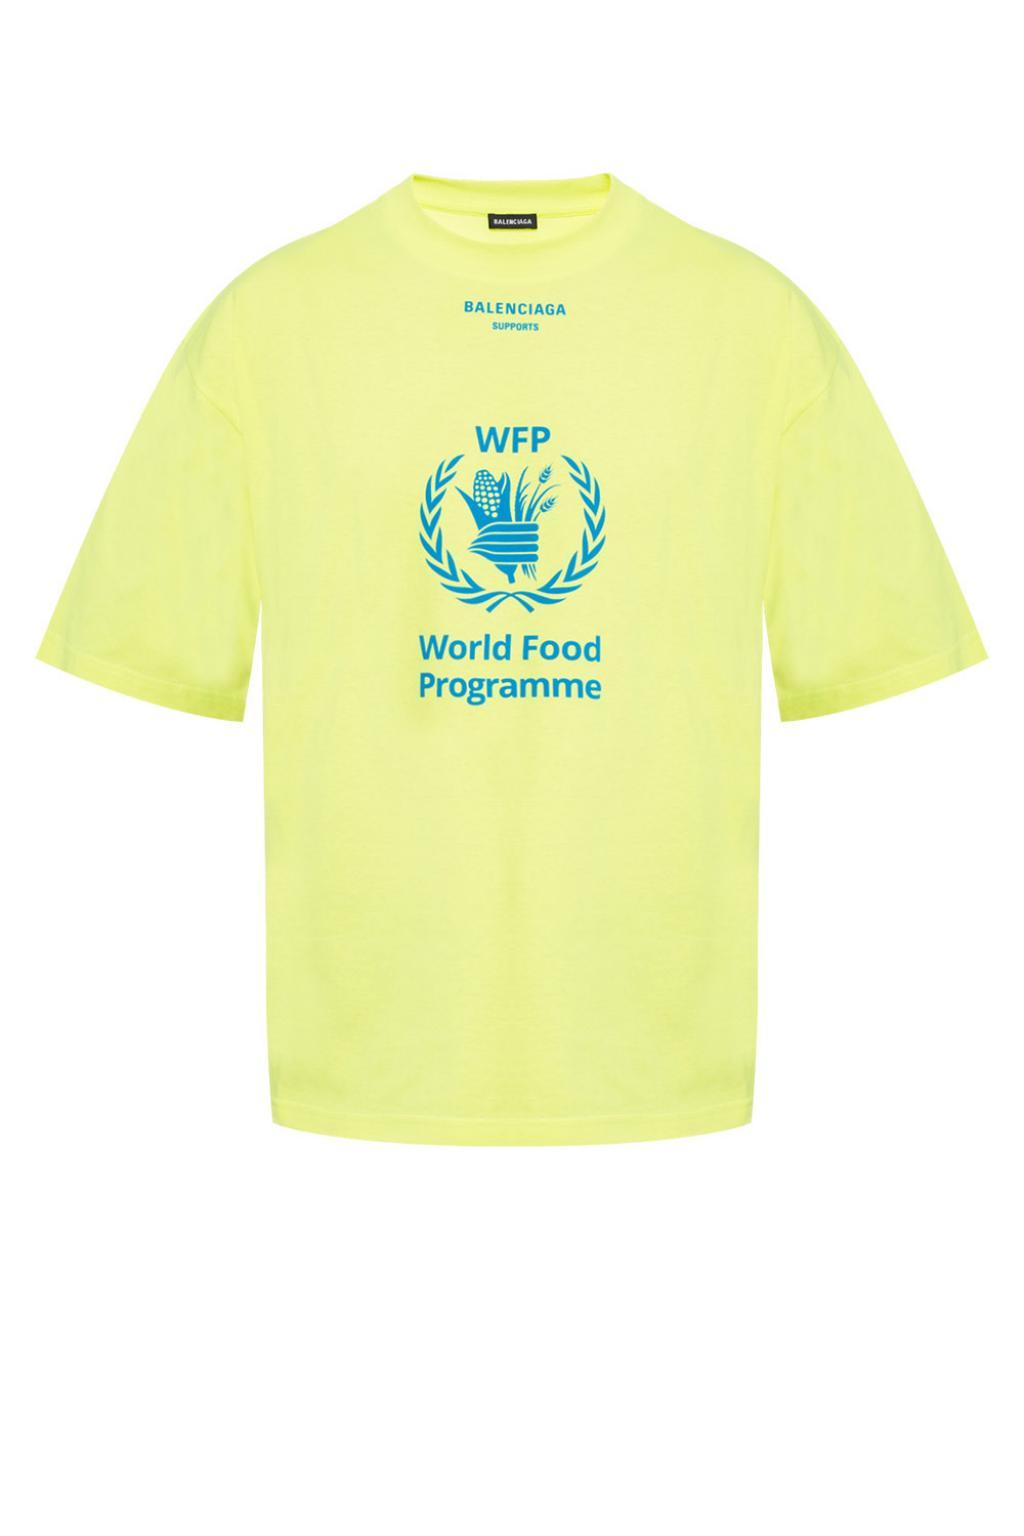 Balenciaga Cotton World Food Programme T-shirt in Yellow for Men - Lyst